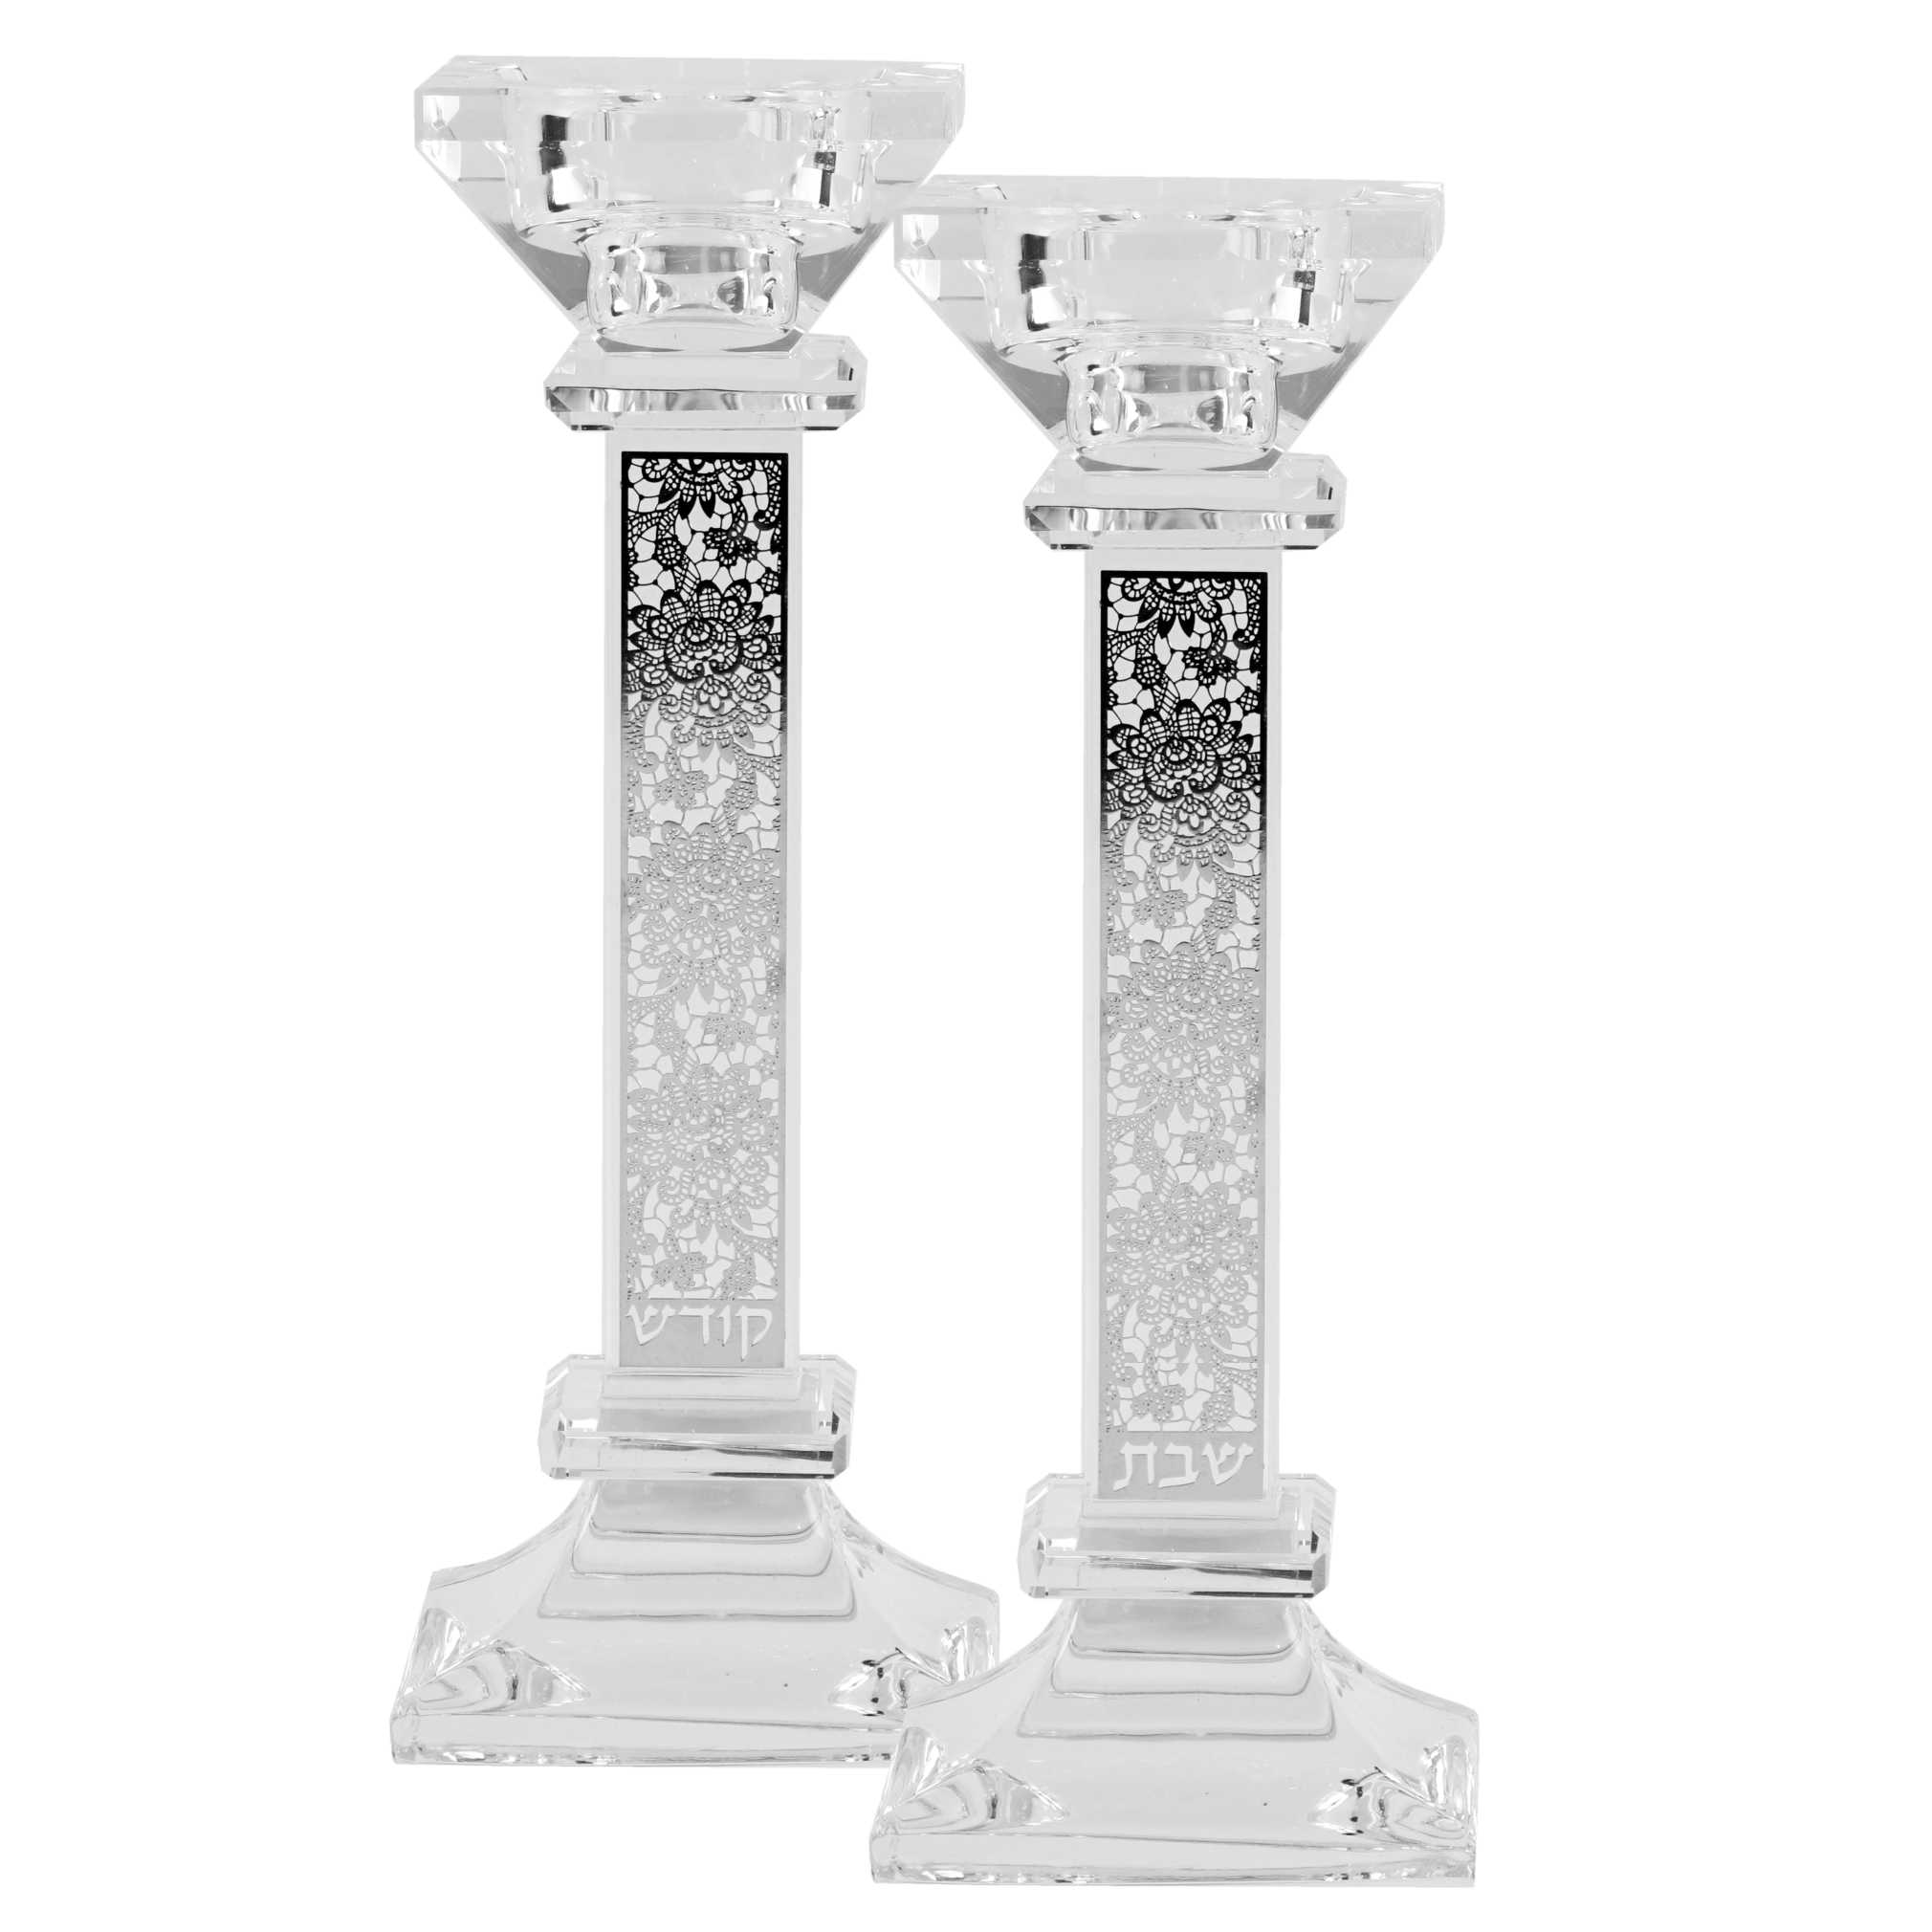 Crystal Square Candlesticks - Silver Floral Design